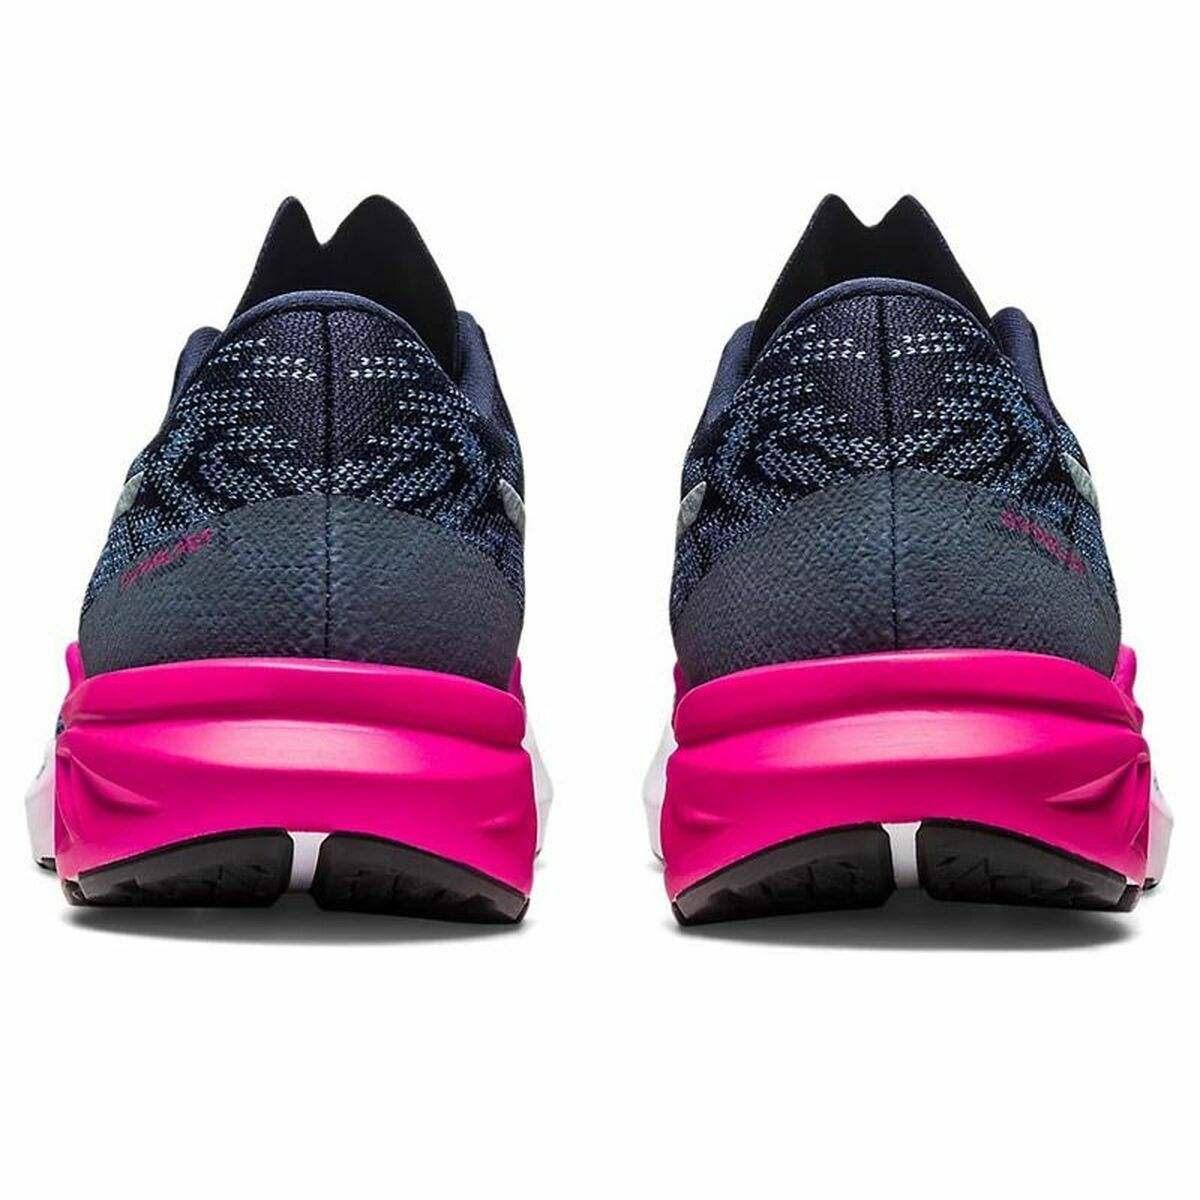 Chaussures de Running pour Adultes Asics Dynablast 3 Femme Bleu foncé - Asics - Jardin D'Eyden - jardindeyden.fr